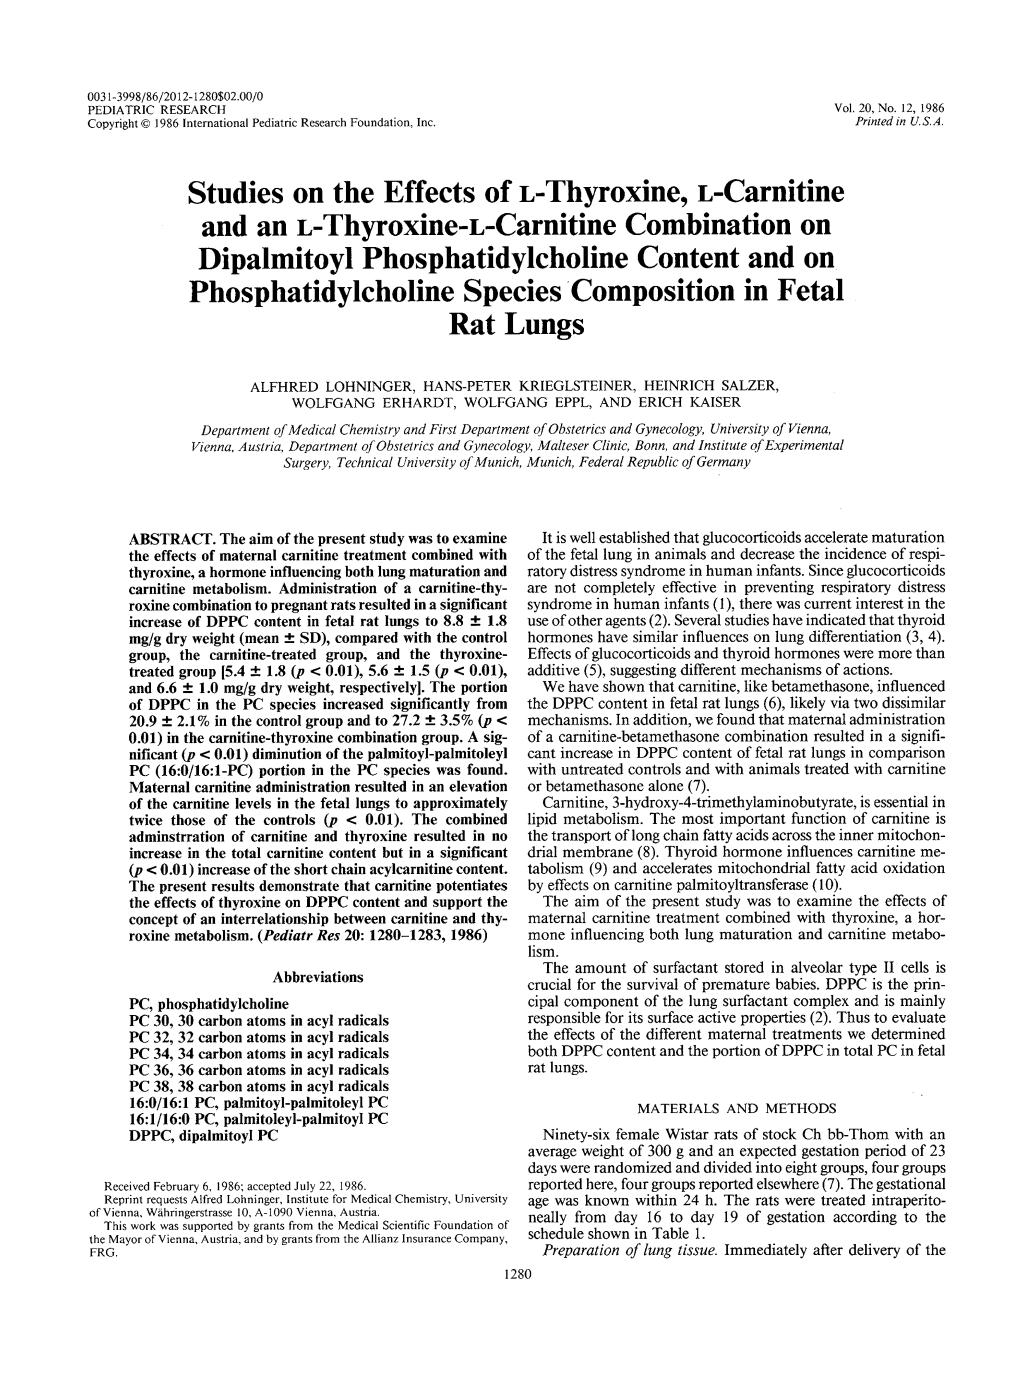 Studies on the Effects of T Thyroxine, L-Carnitine and an L-Thyroxine-L